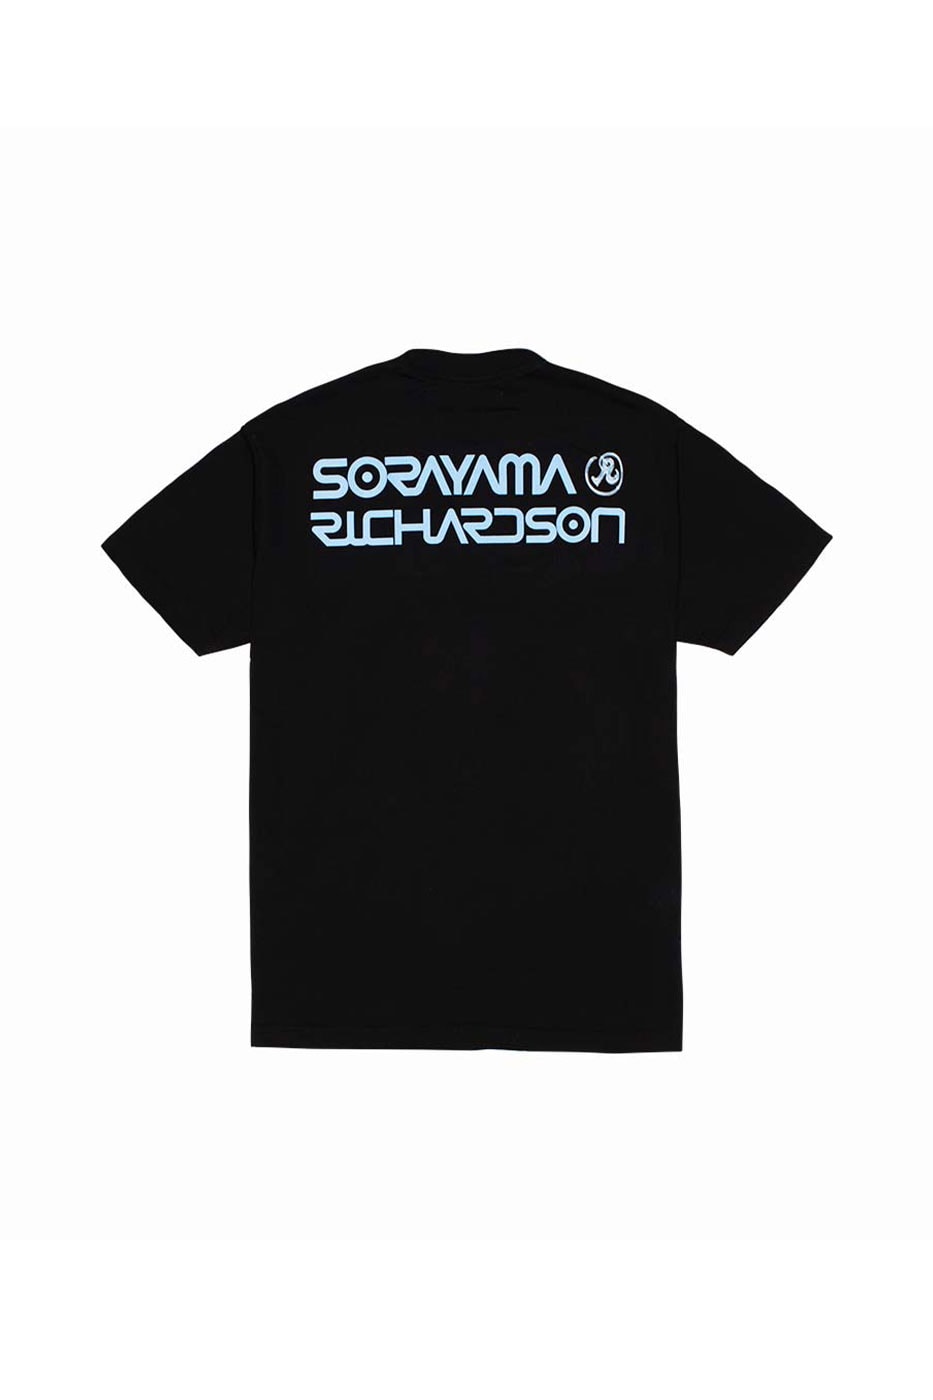 Richardson Sorayama Collaboration Collection Release Info Buy Price Incense Burner T-Shirt Hoodie Sweatpants Sexy Robots